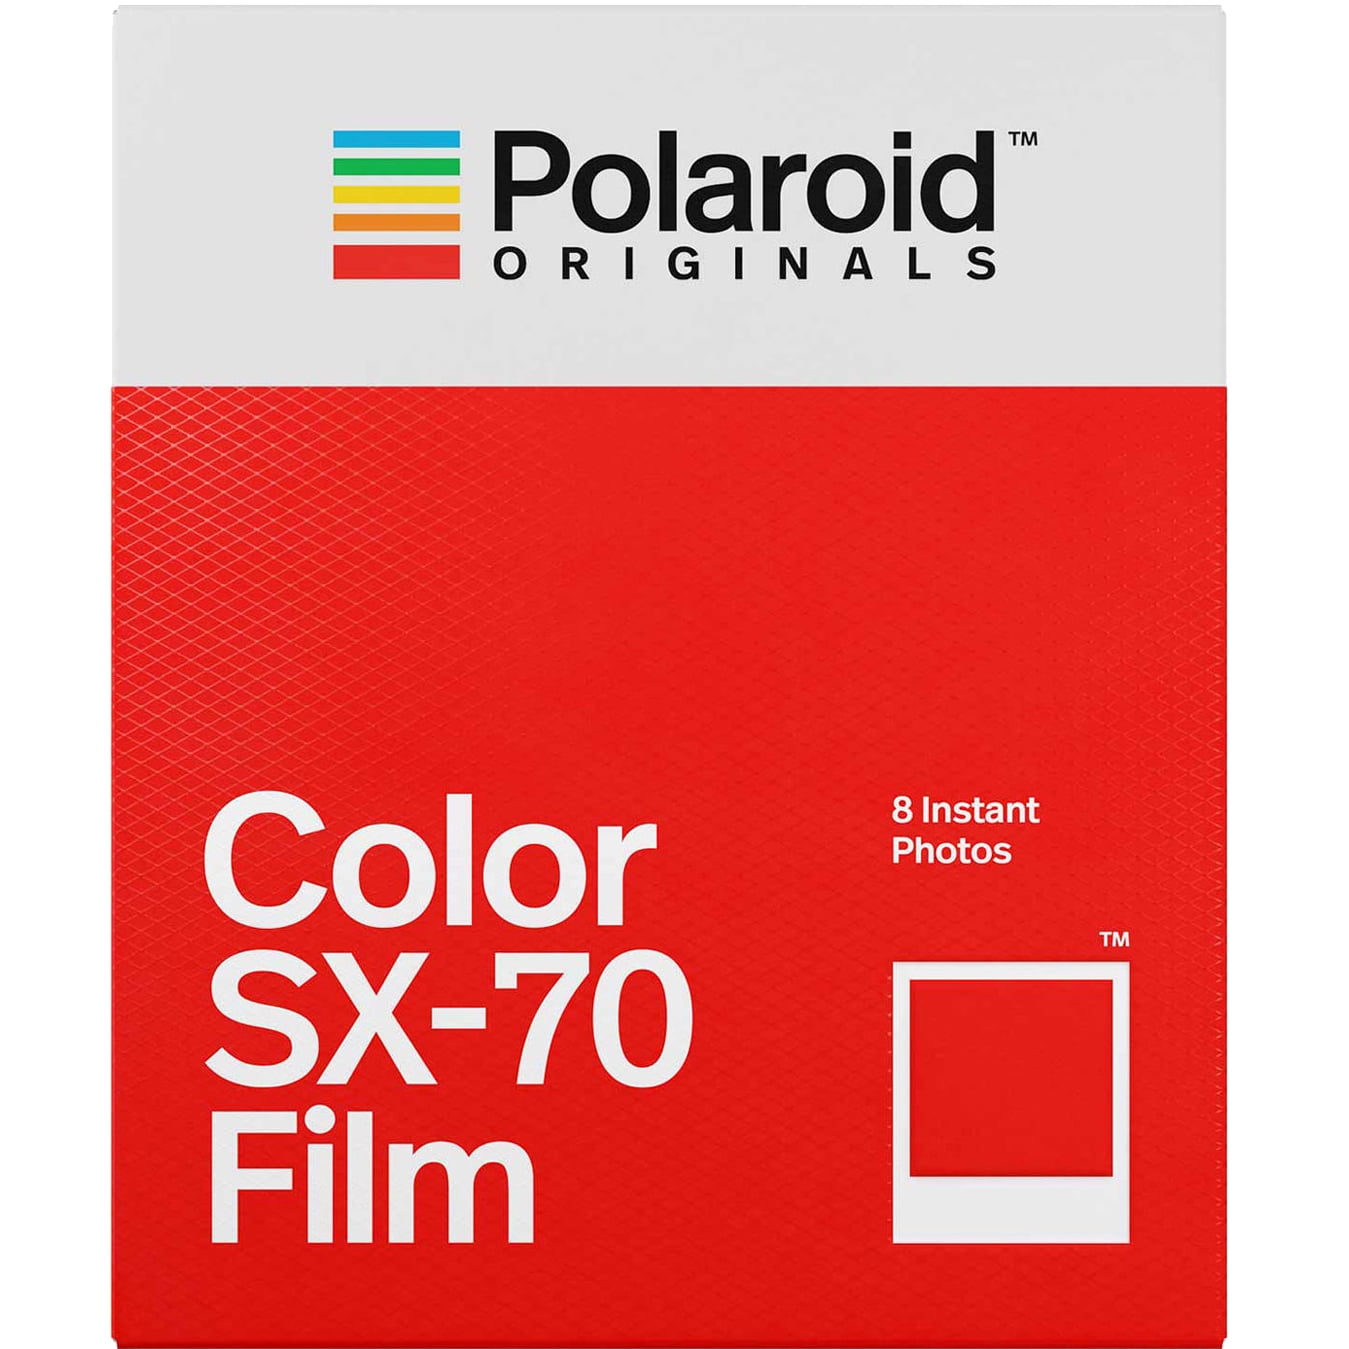 toonhoogte Onrustig voorspelling Polaroid Originals Color Film for SX-70 - Walmart.com